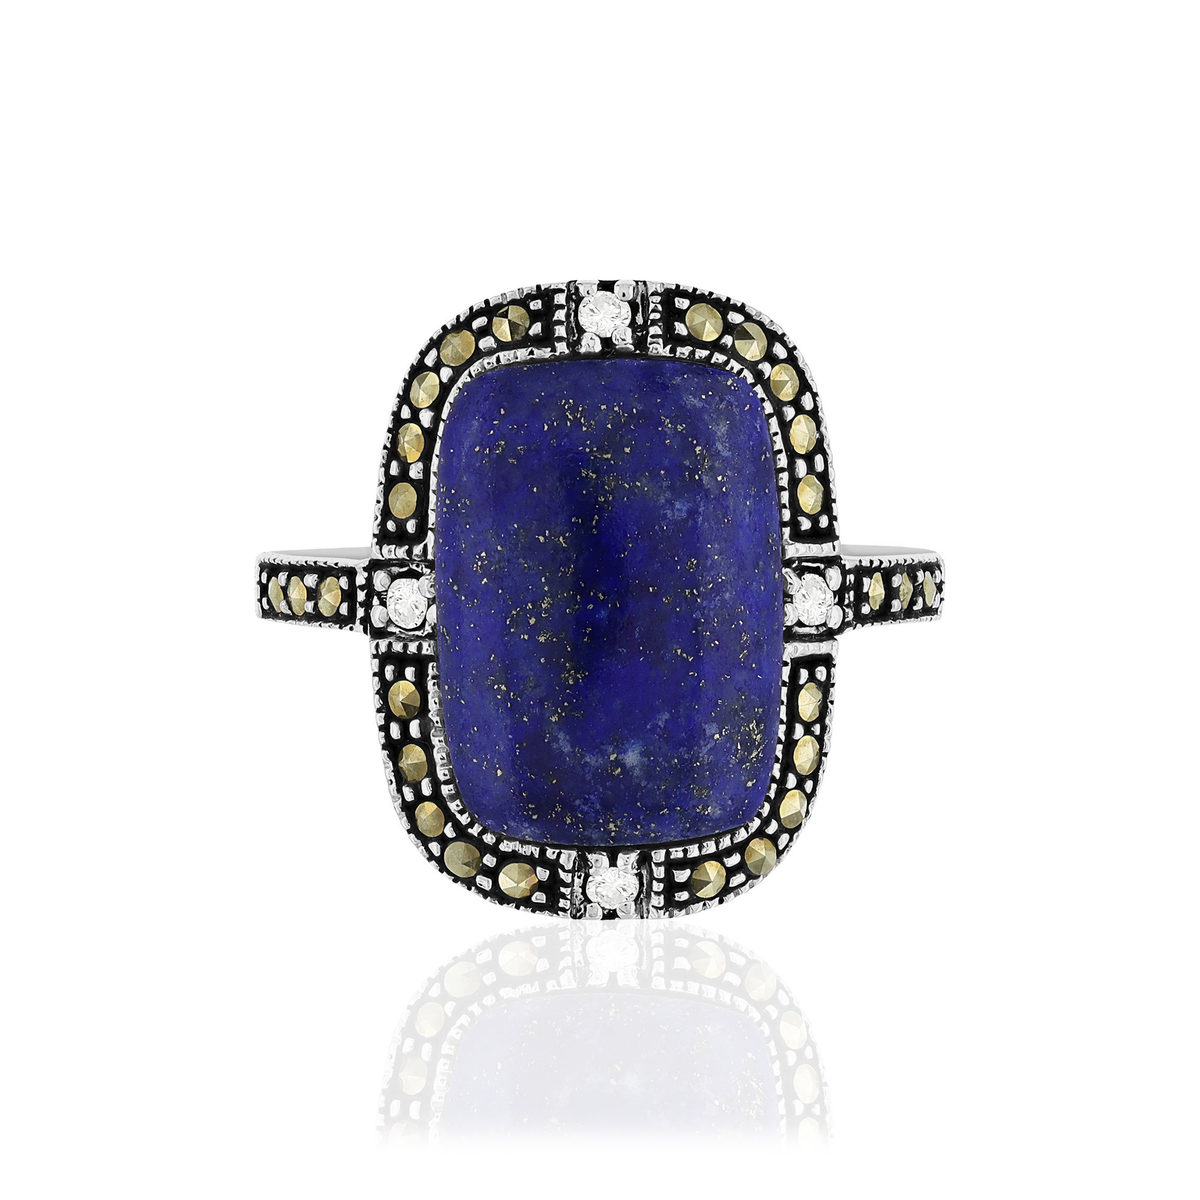 Bague argent 925 lapis lazuli marcassites zirconias - vue 3